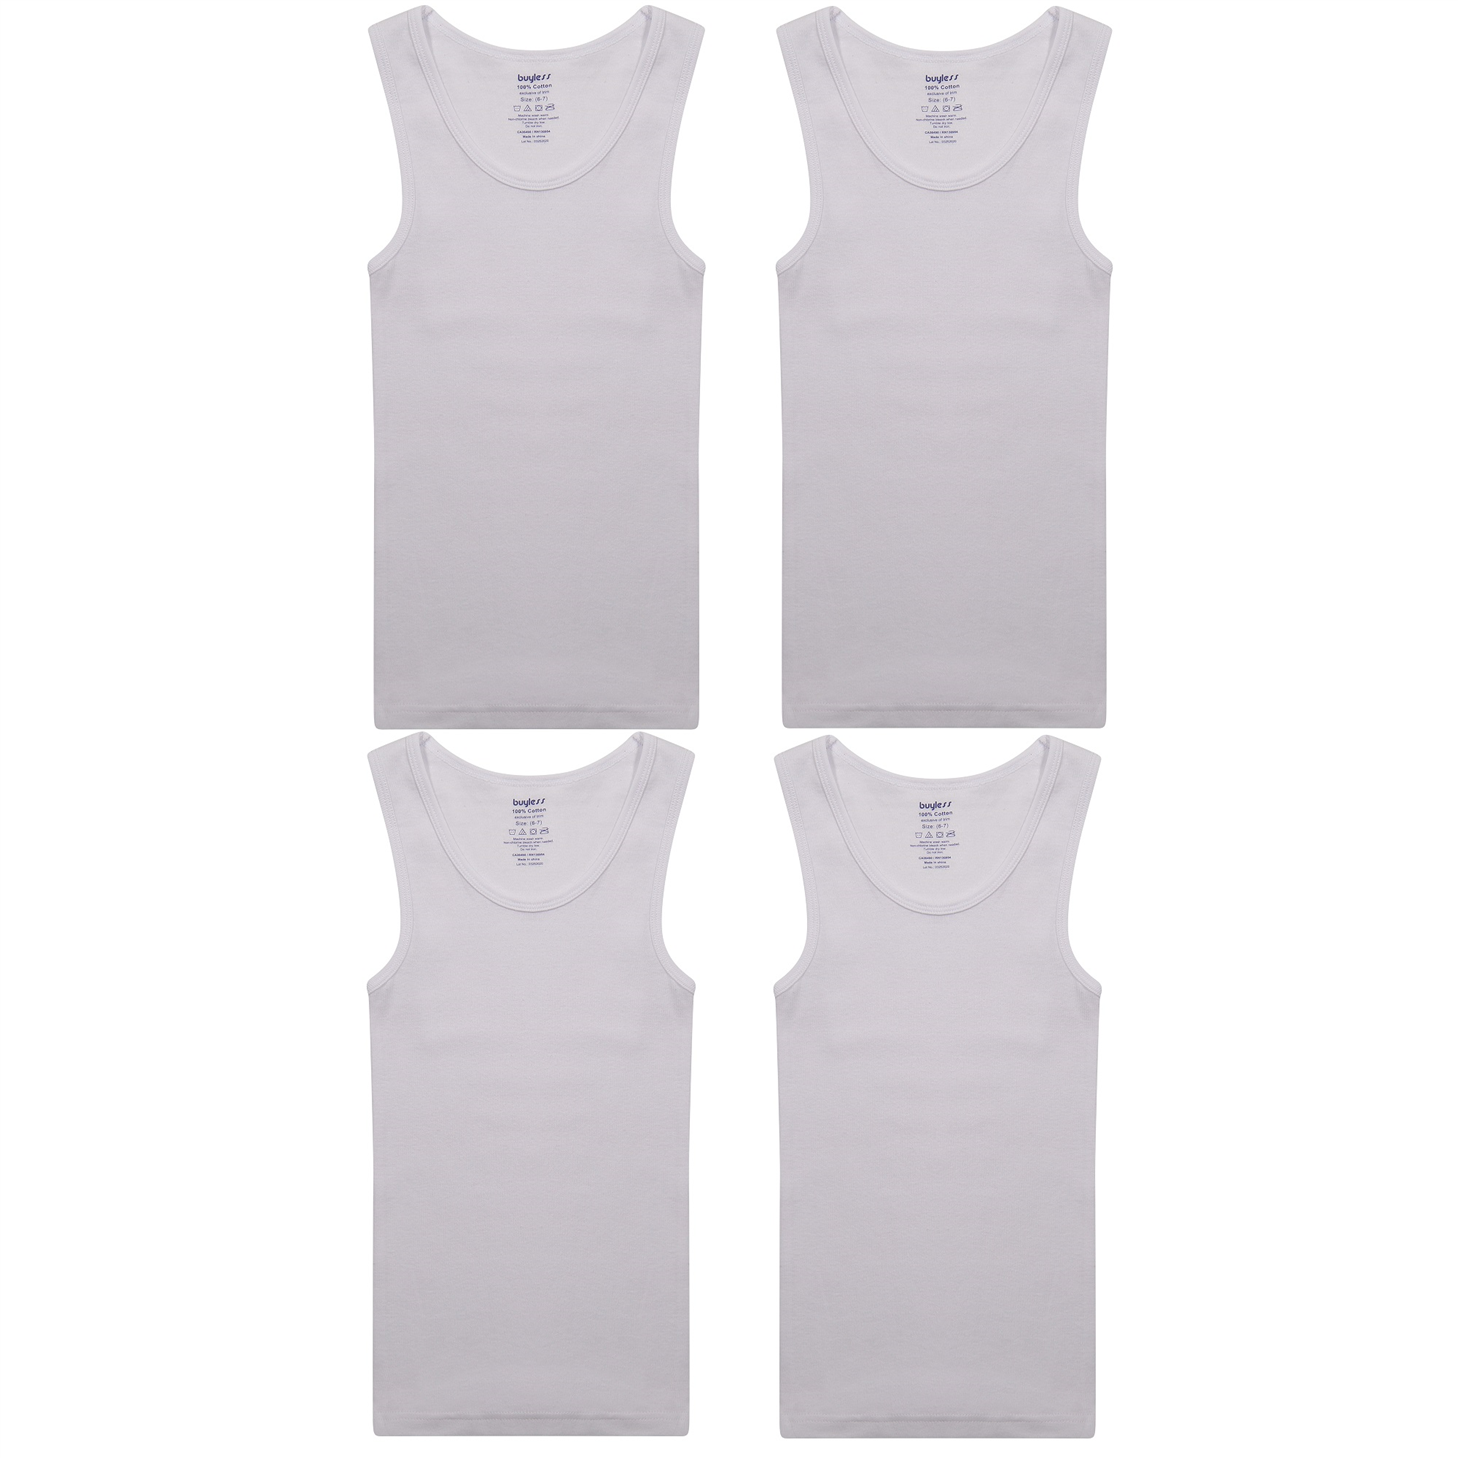 Buyless Fashion Boys Undershirts Tank Top White Soft Cotton Pack of 4